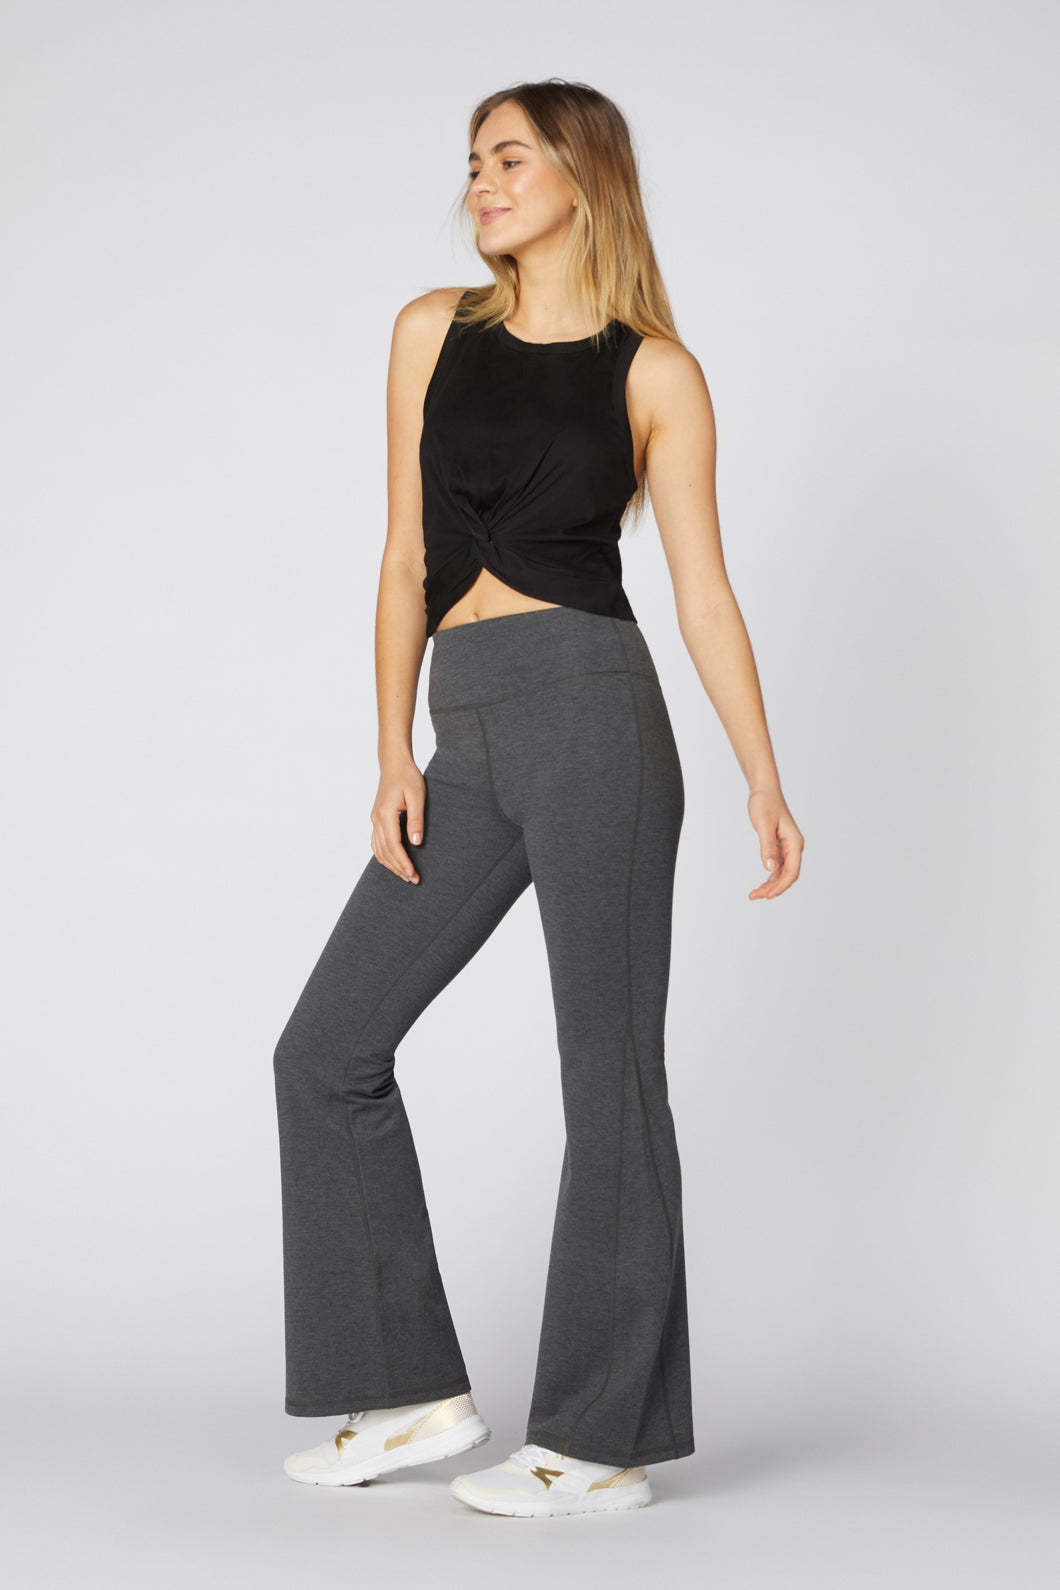 Yoga Pants Stretch Cotton Fold Over High Waist Flare Legging STORE CLOSING  | eBay